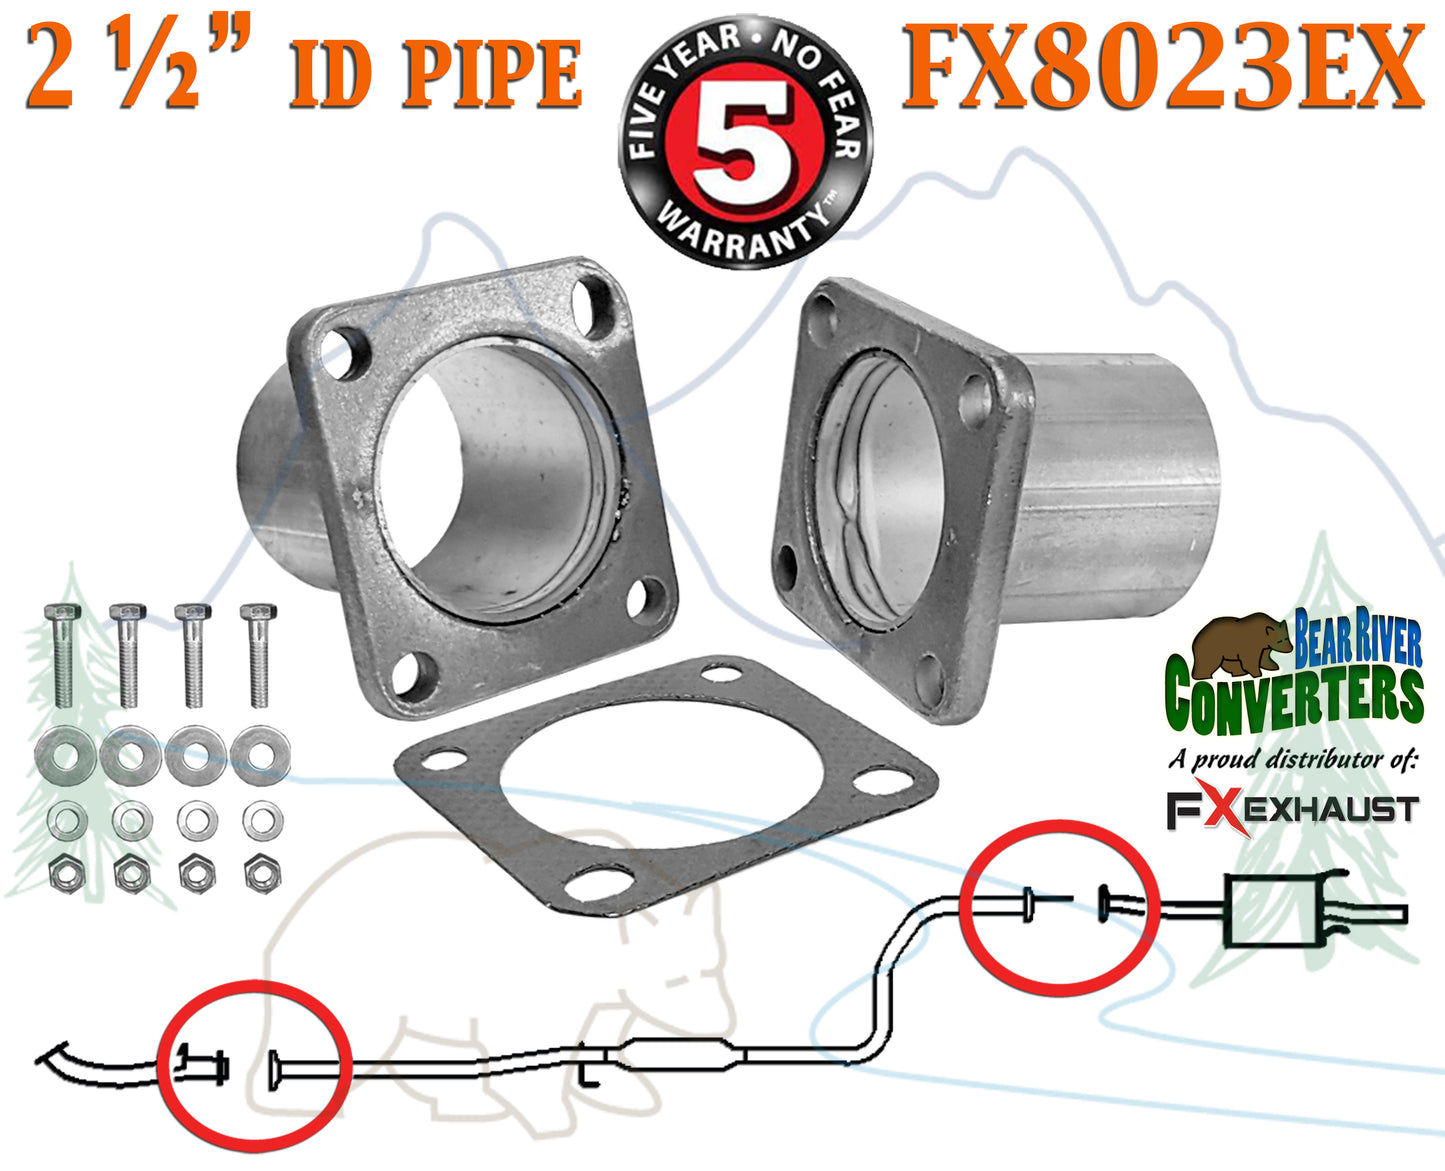 FX8023EX 2 1/2" ID Universal QuickFix Exhaust Square Flange Repair Pipe Kit